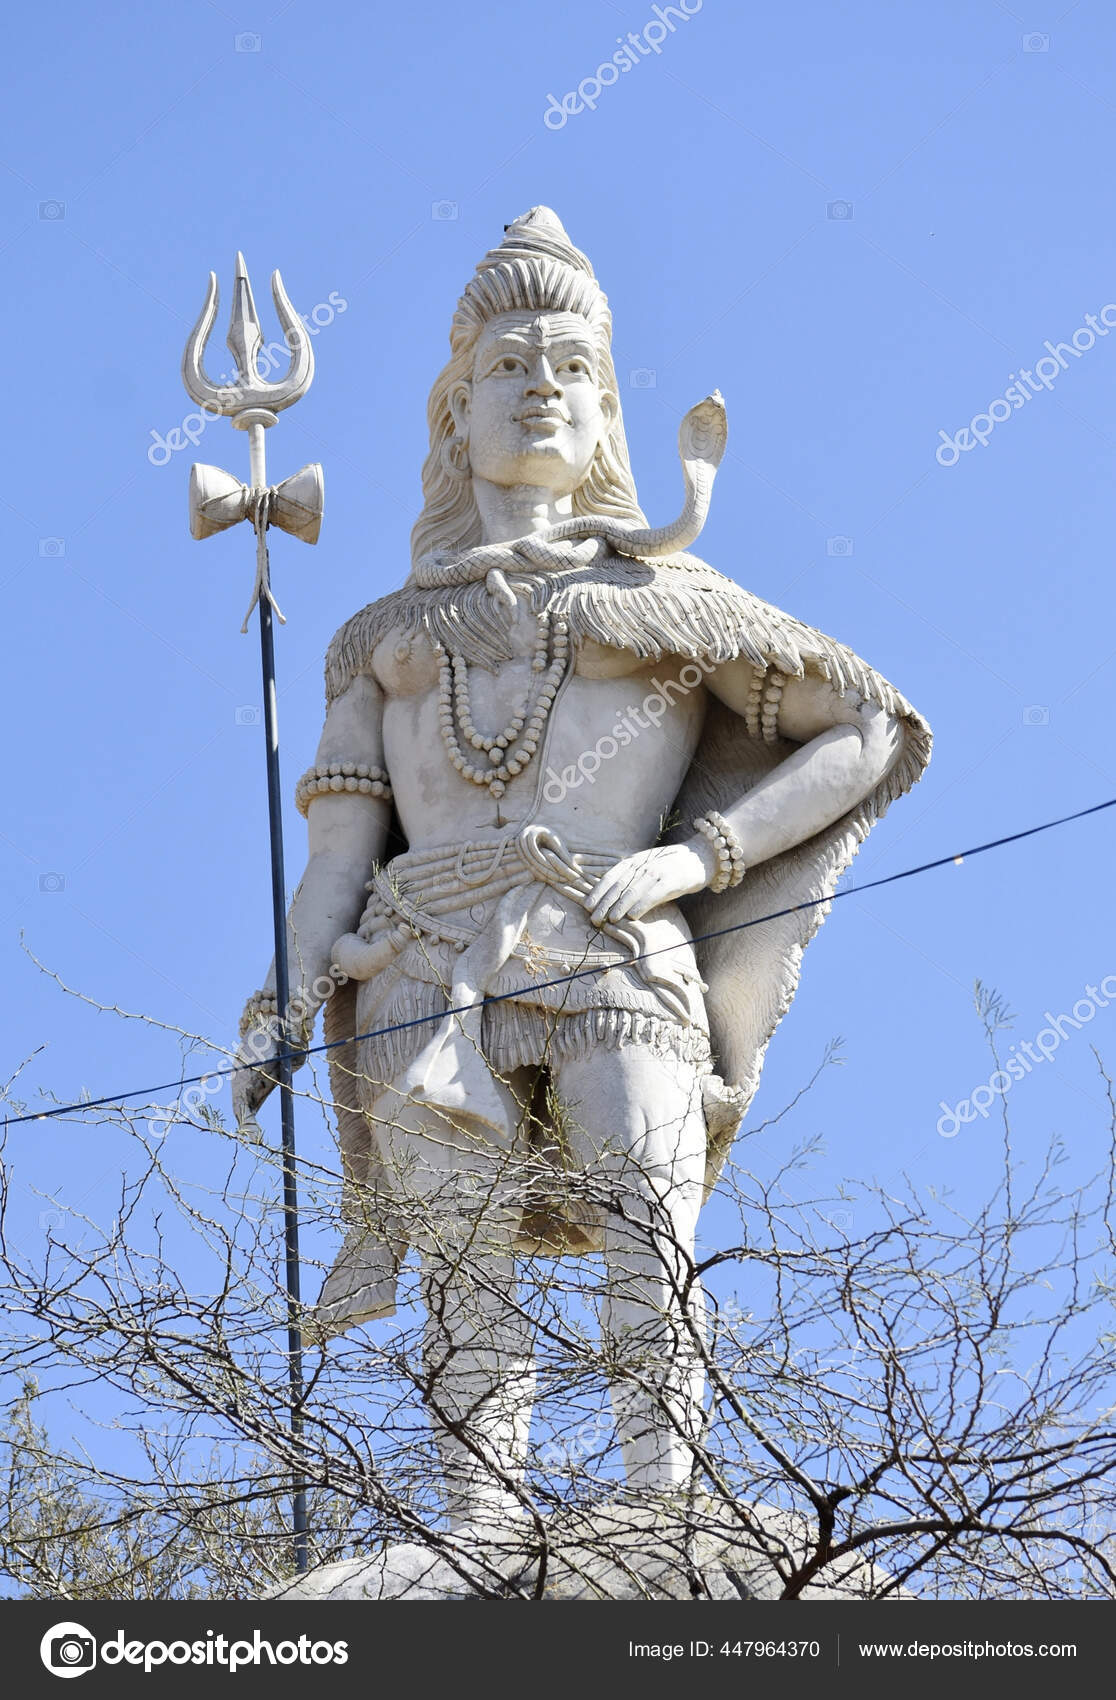 Lord shiva standing statue Stock Photos, Royalty Free Lord shiva ...